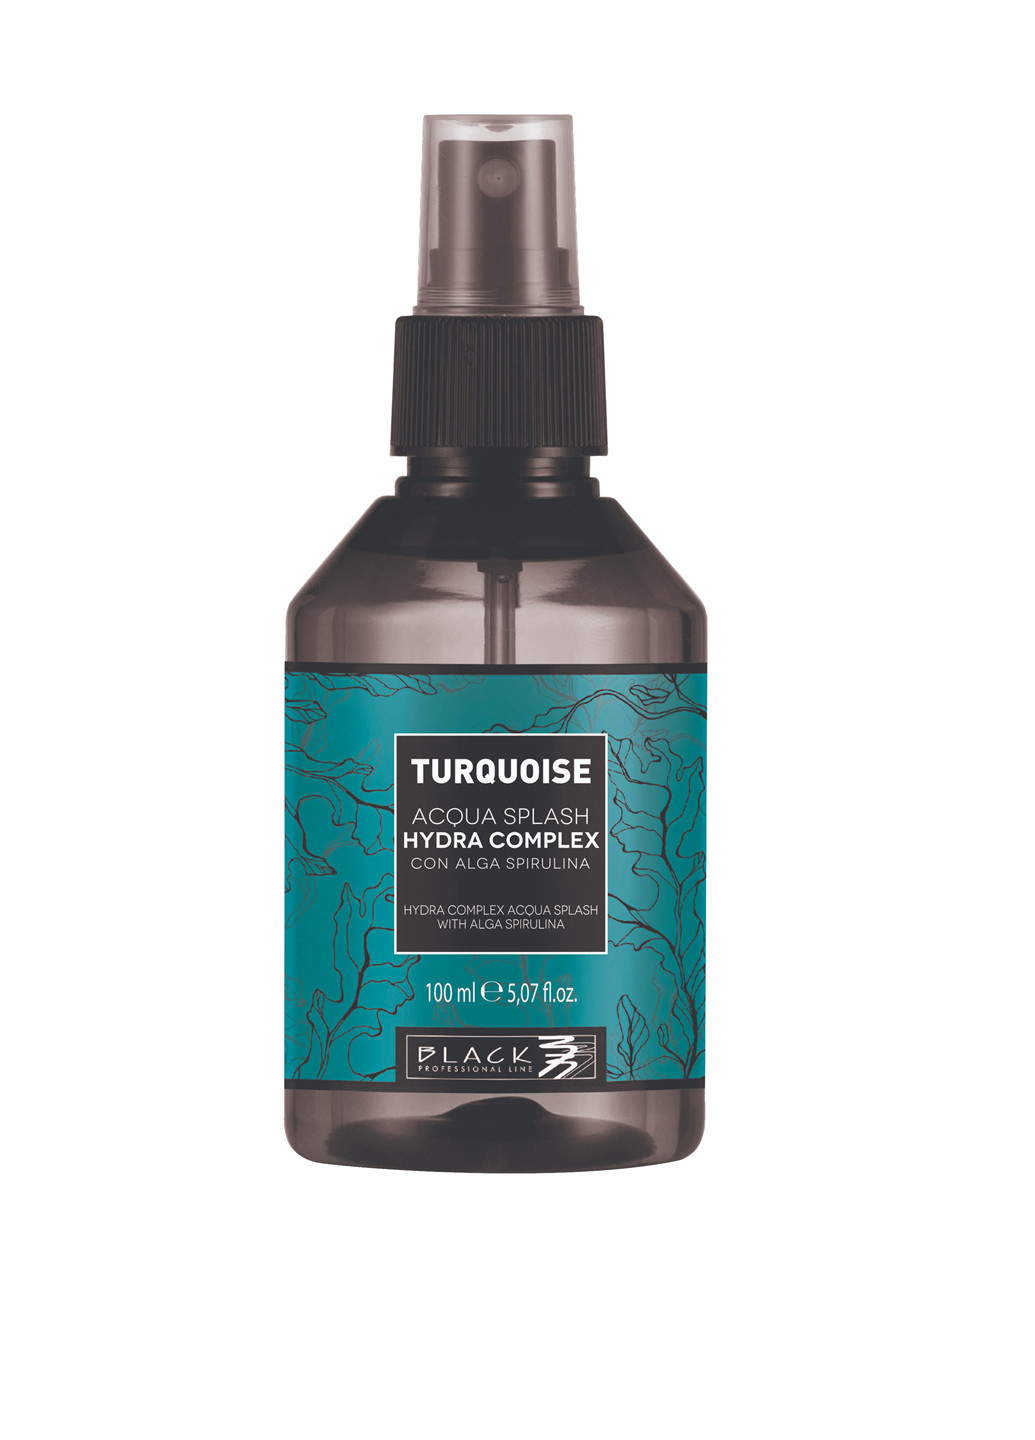 Спрей для волос Turquoise Hydra Complex Aqua Splash, 100 мл Black Professional Line (182427466)